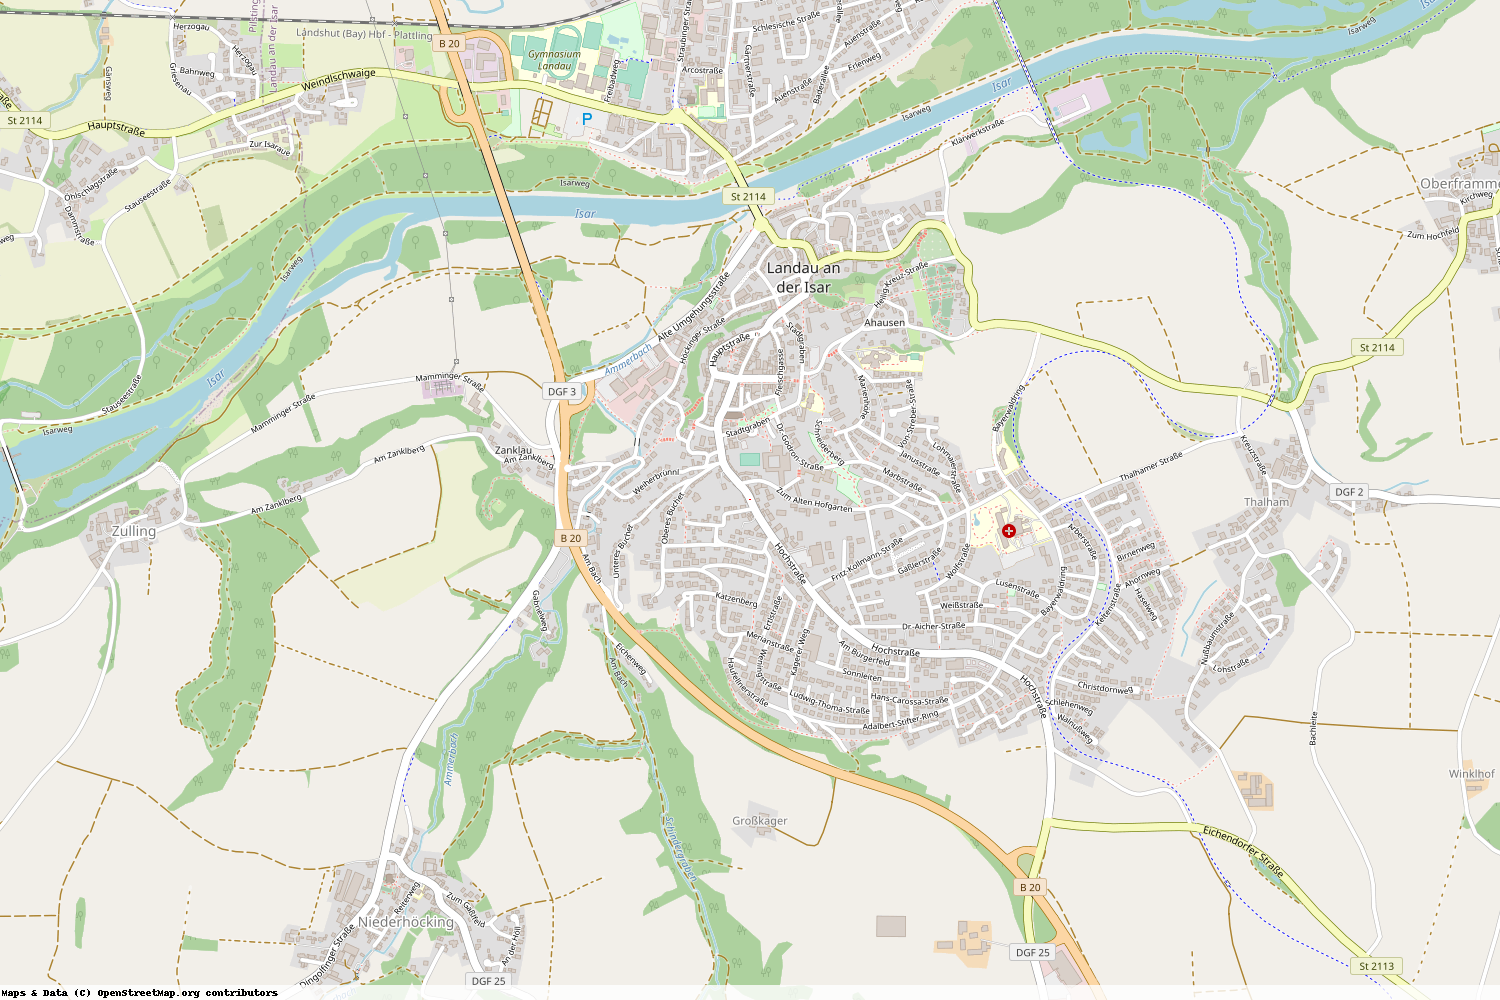 Ist gerade Stromausfall in Bayern - Dingolfing-Landau - Landau a.d. Isar?